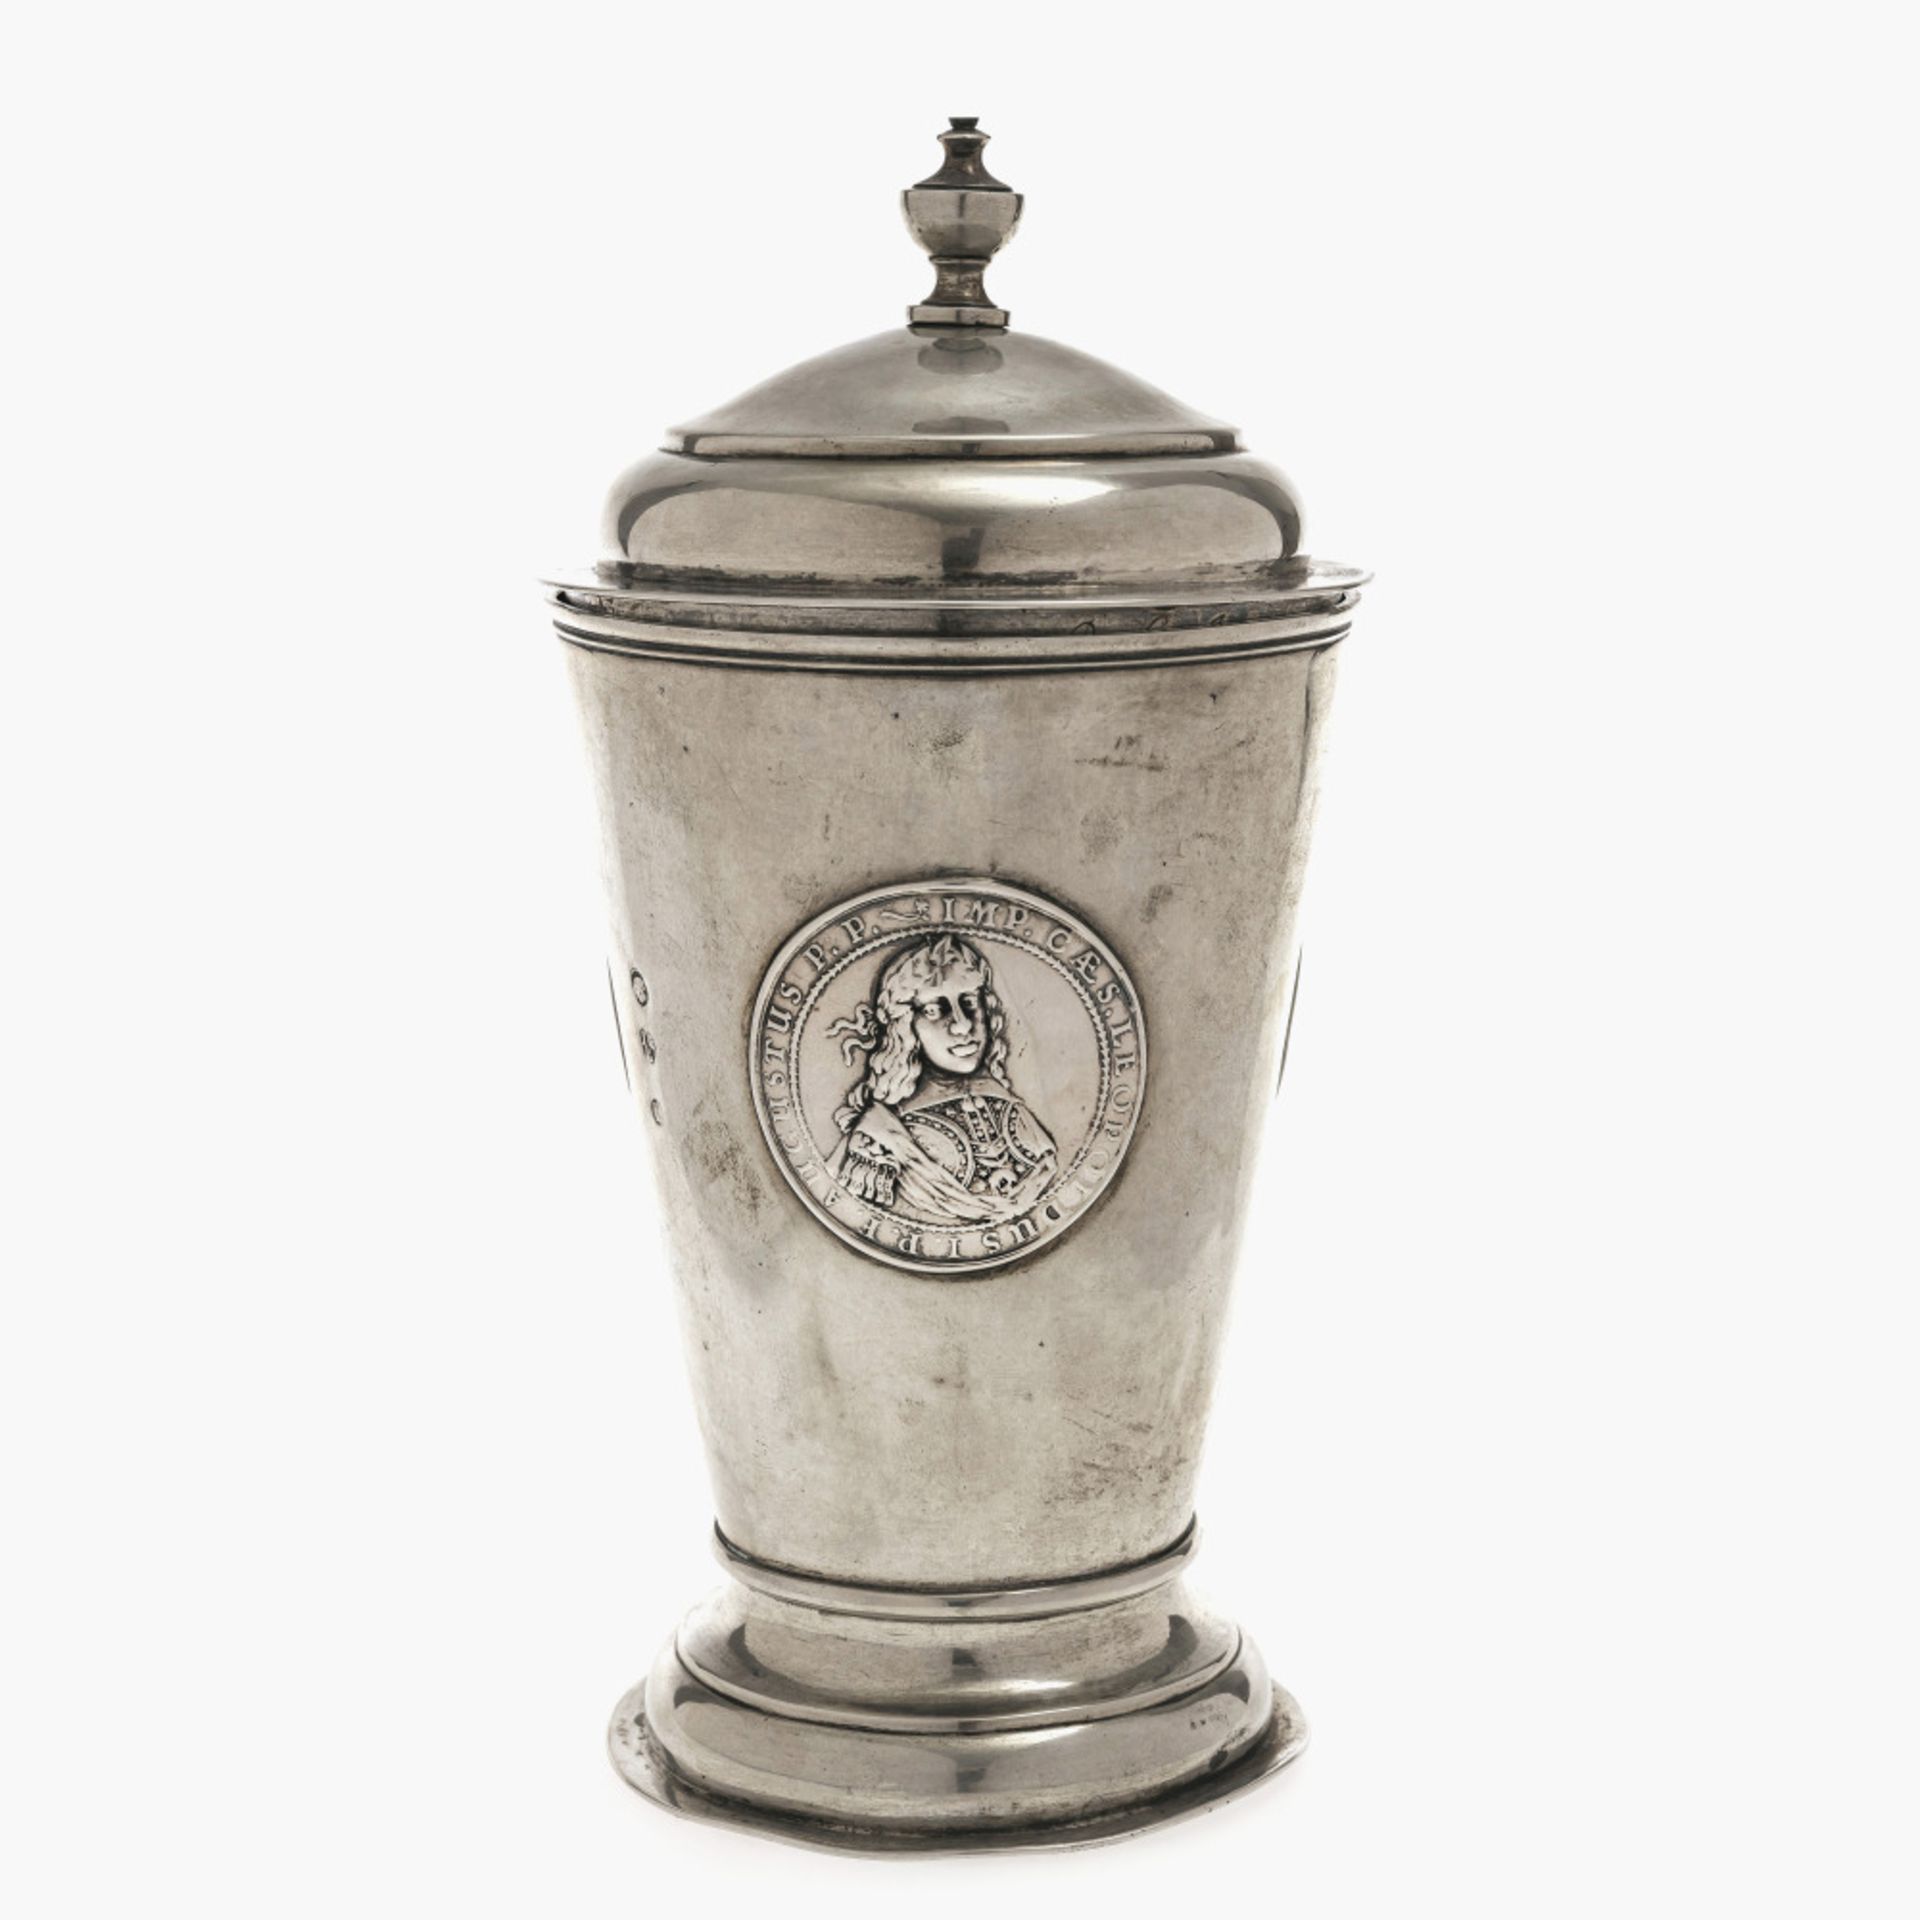 A cup with cover - Breslau, 1793 - 1796, Joseph Gottlieb Lederhose